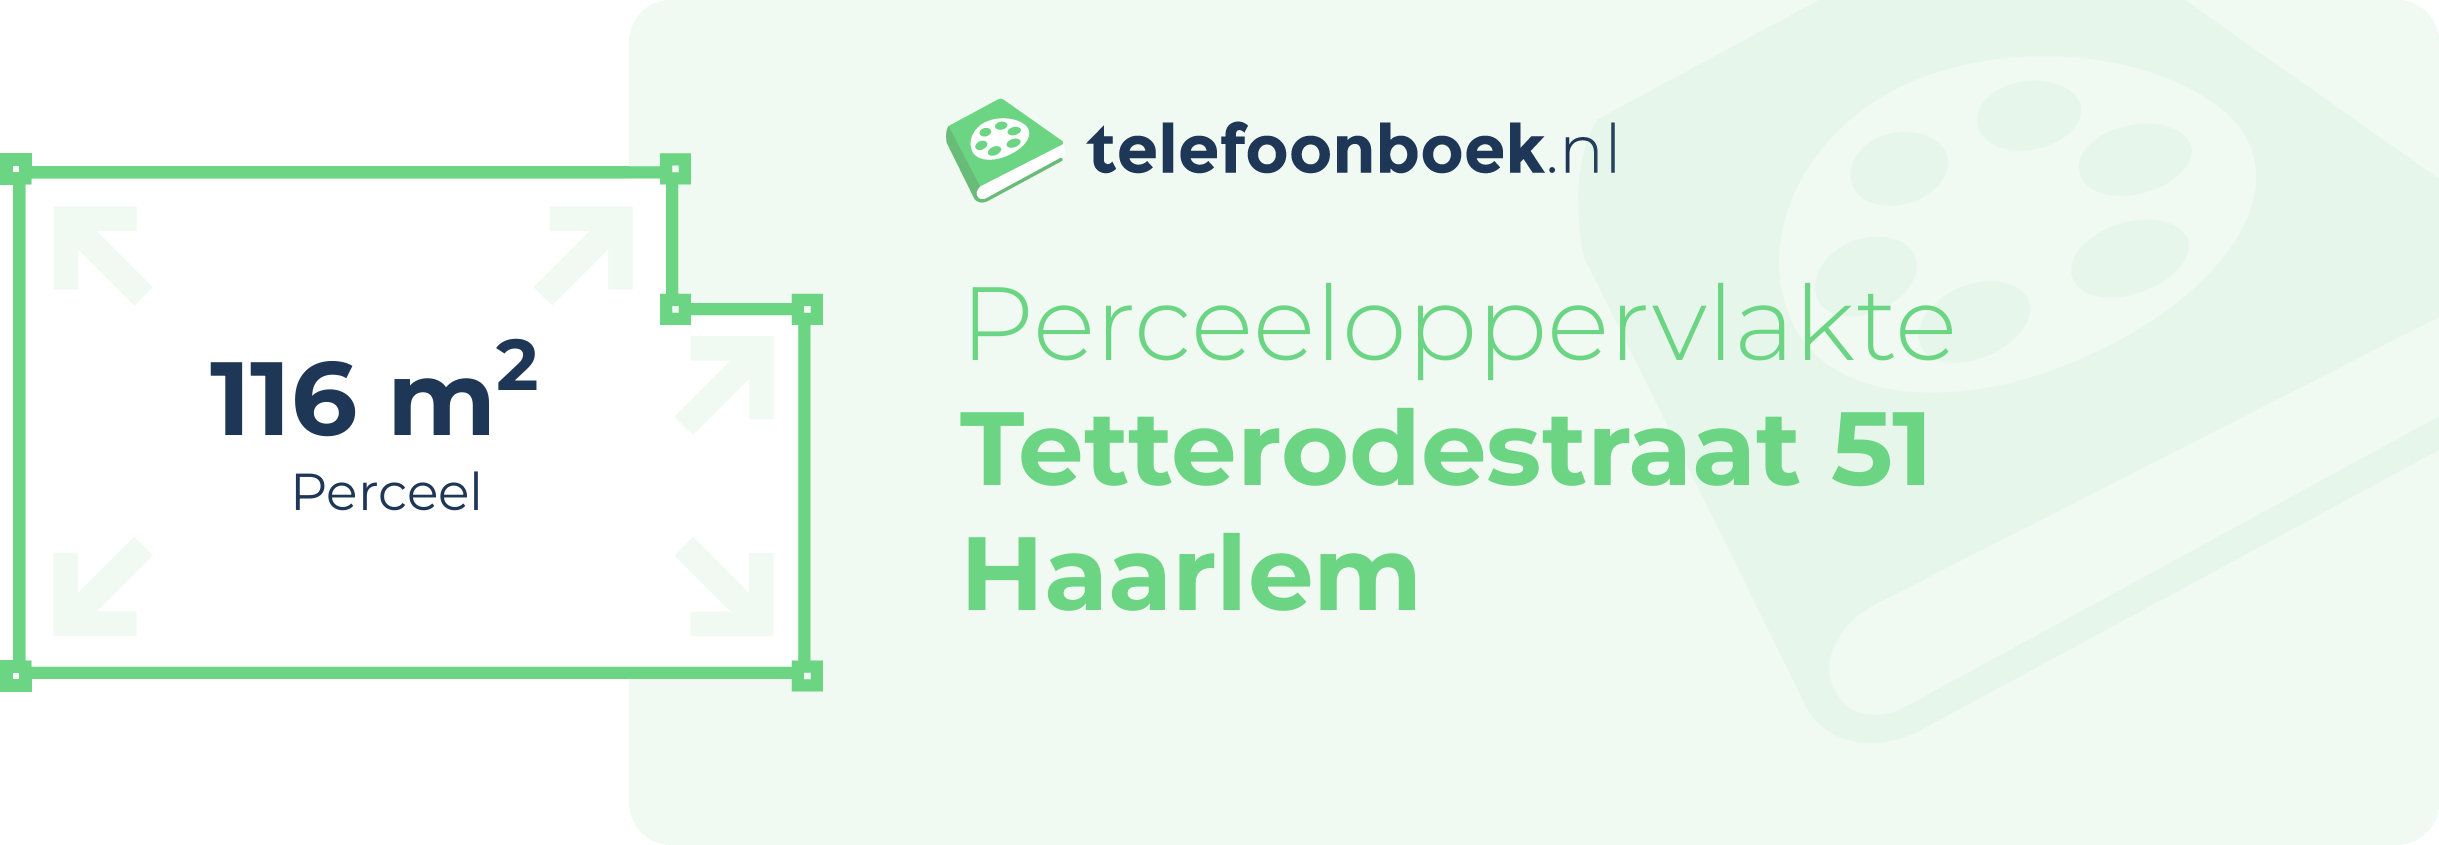 Perceeloppervlakte Tetterodestraat 51 Haarlem